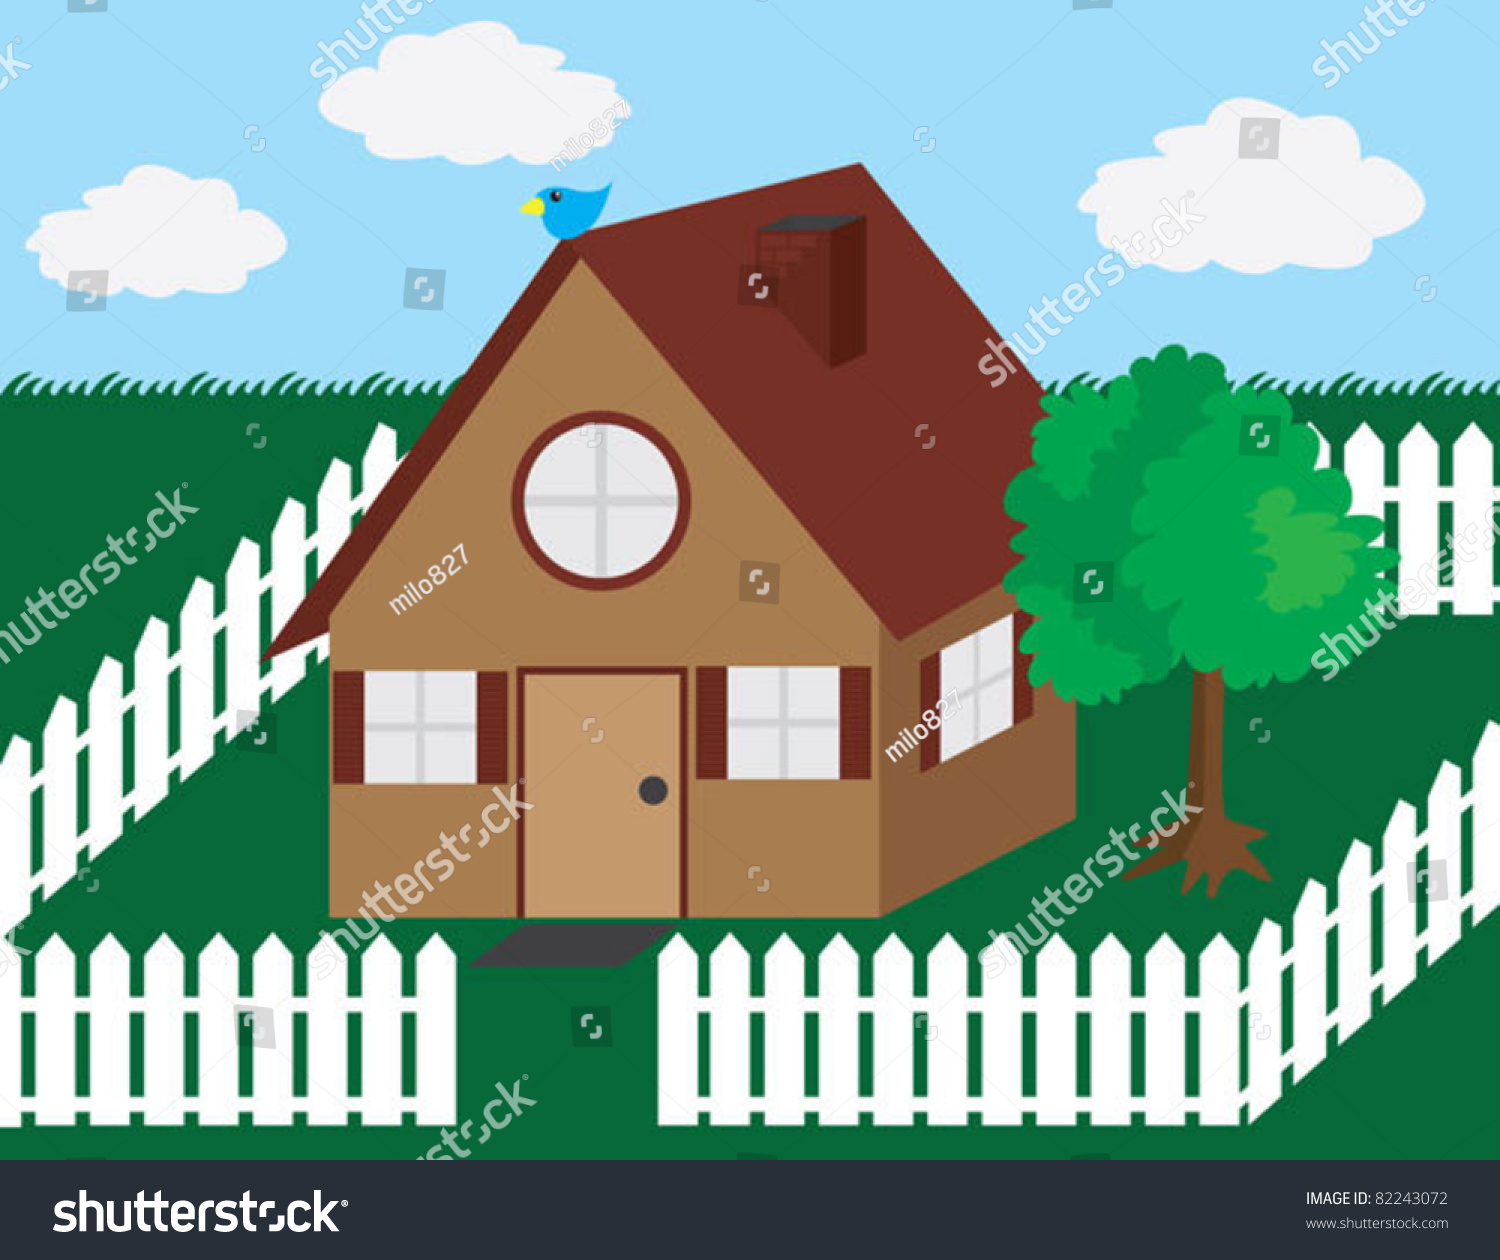 Срисуй домик с забором